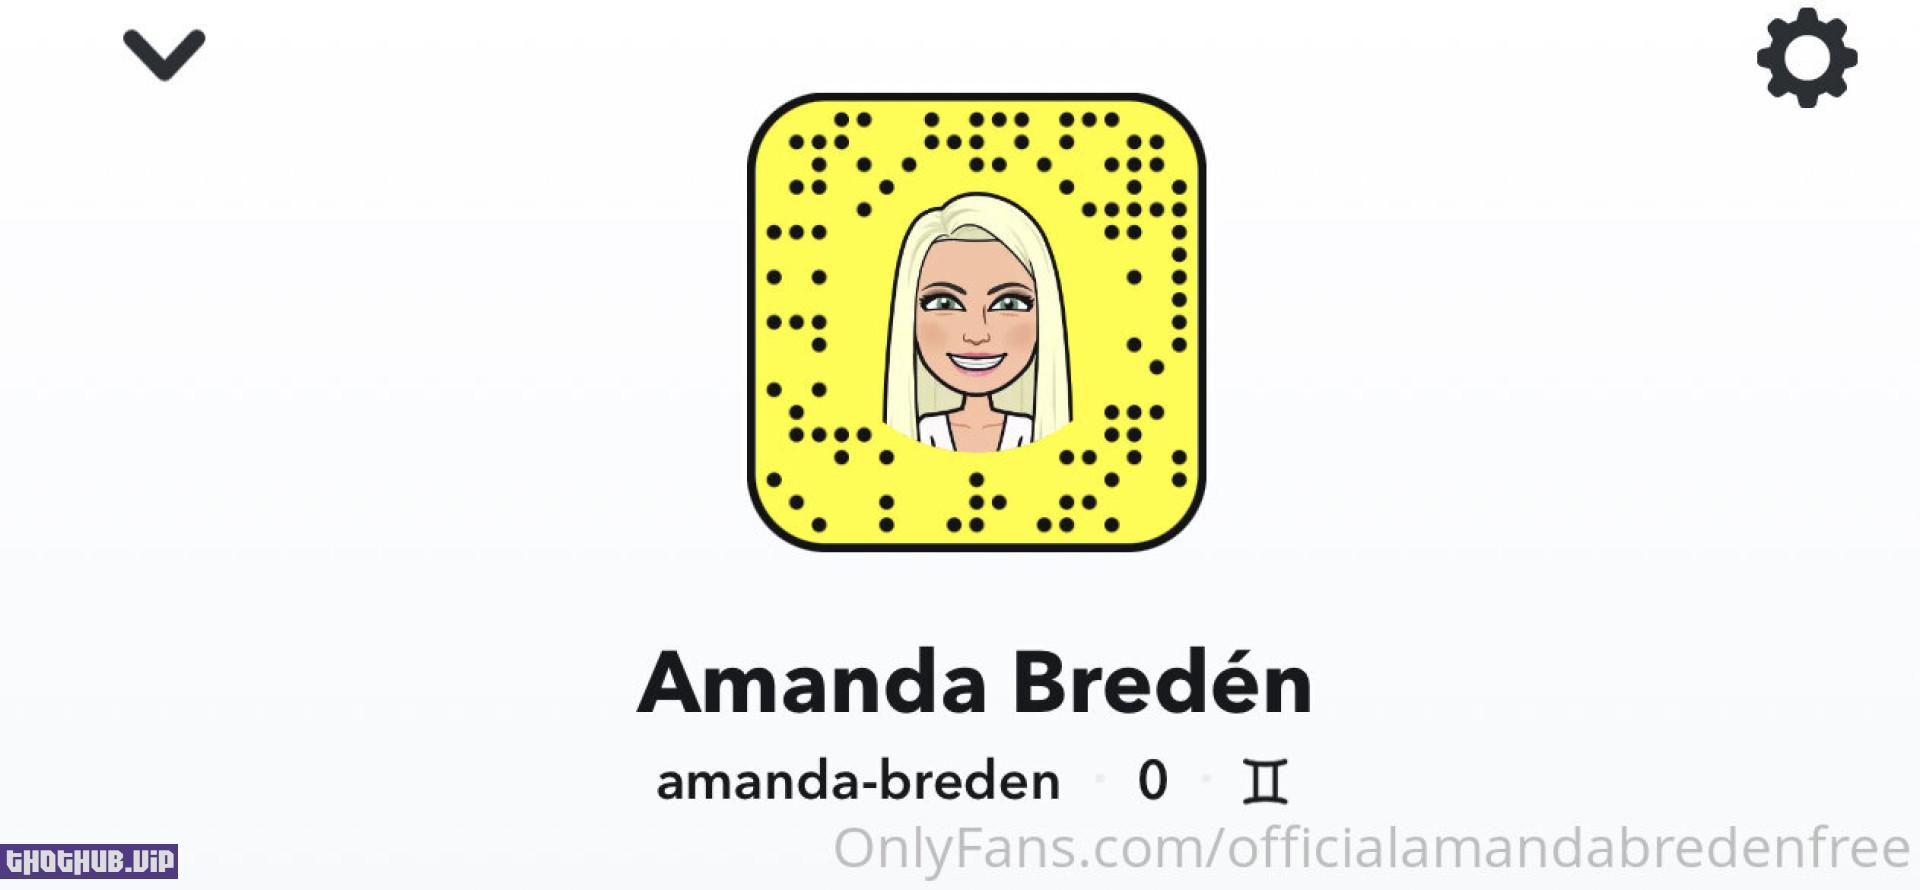 Amanda Bredn FREE (officialamandabredenfree) Onlyfans Leaks (114 images)